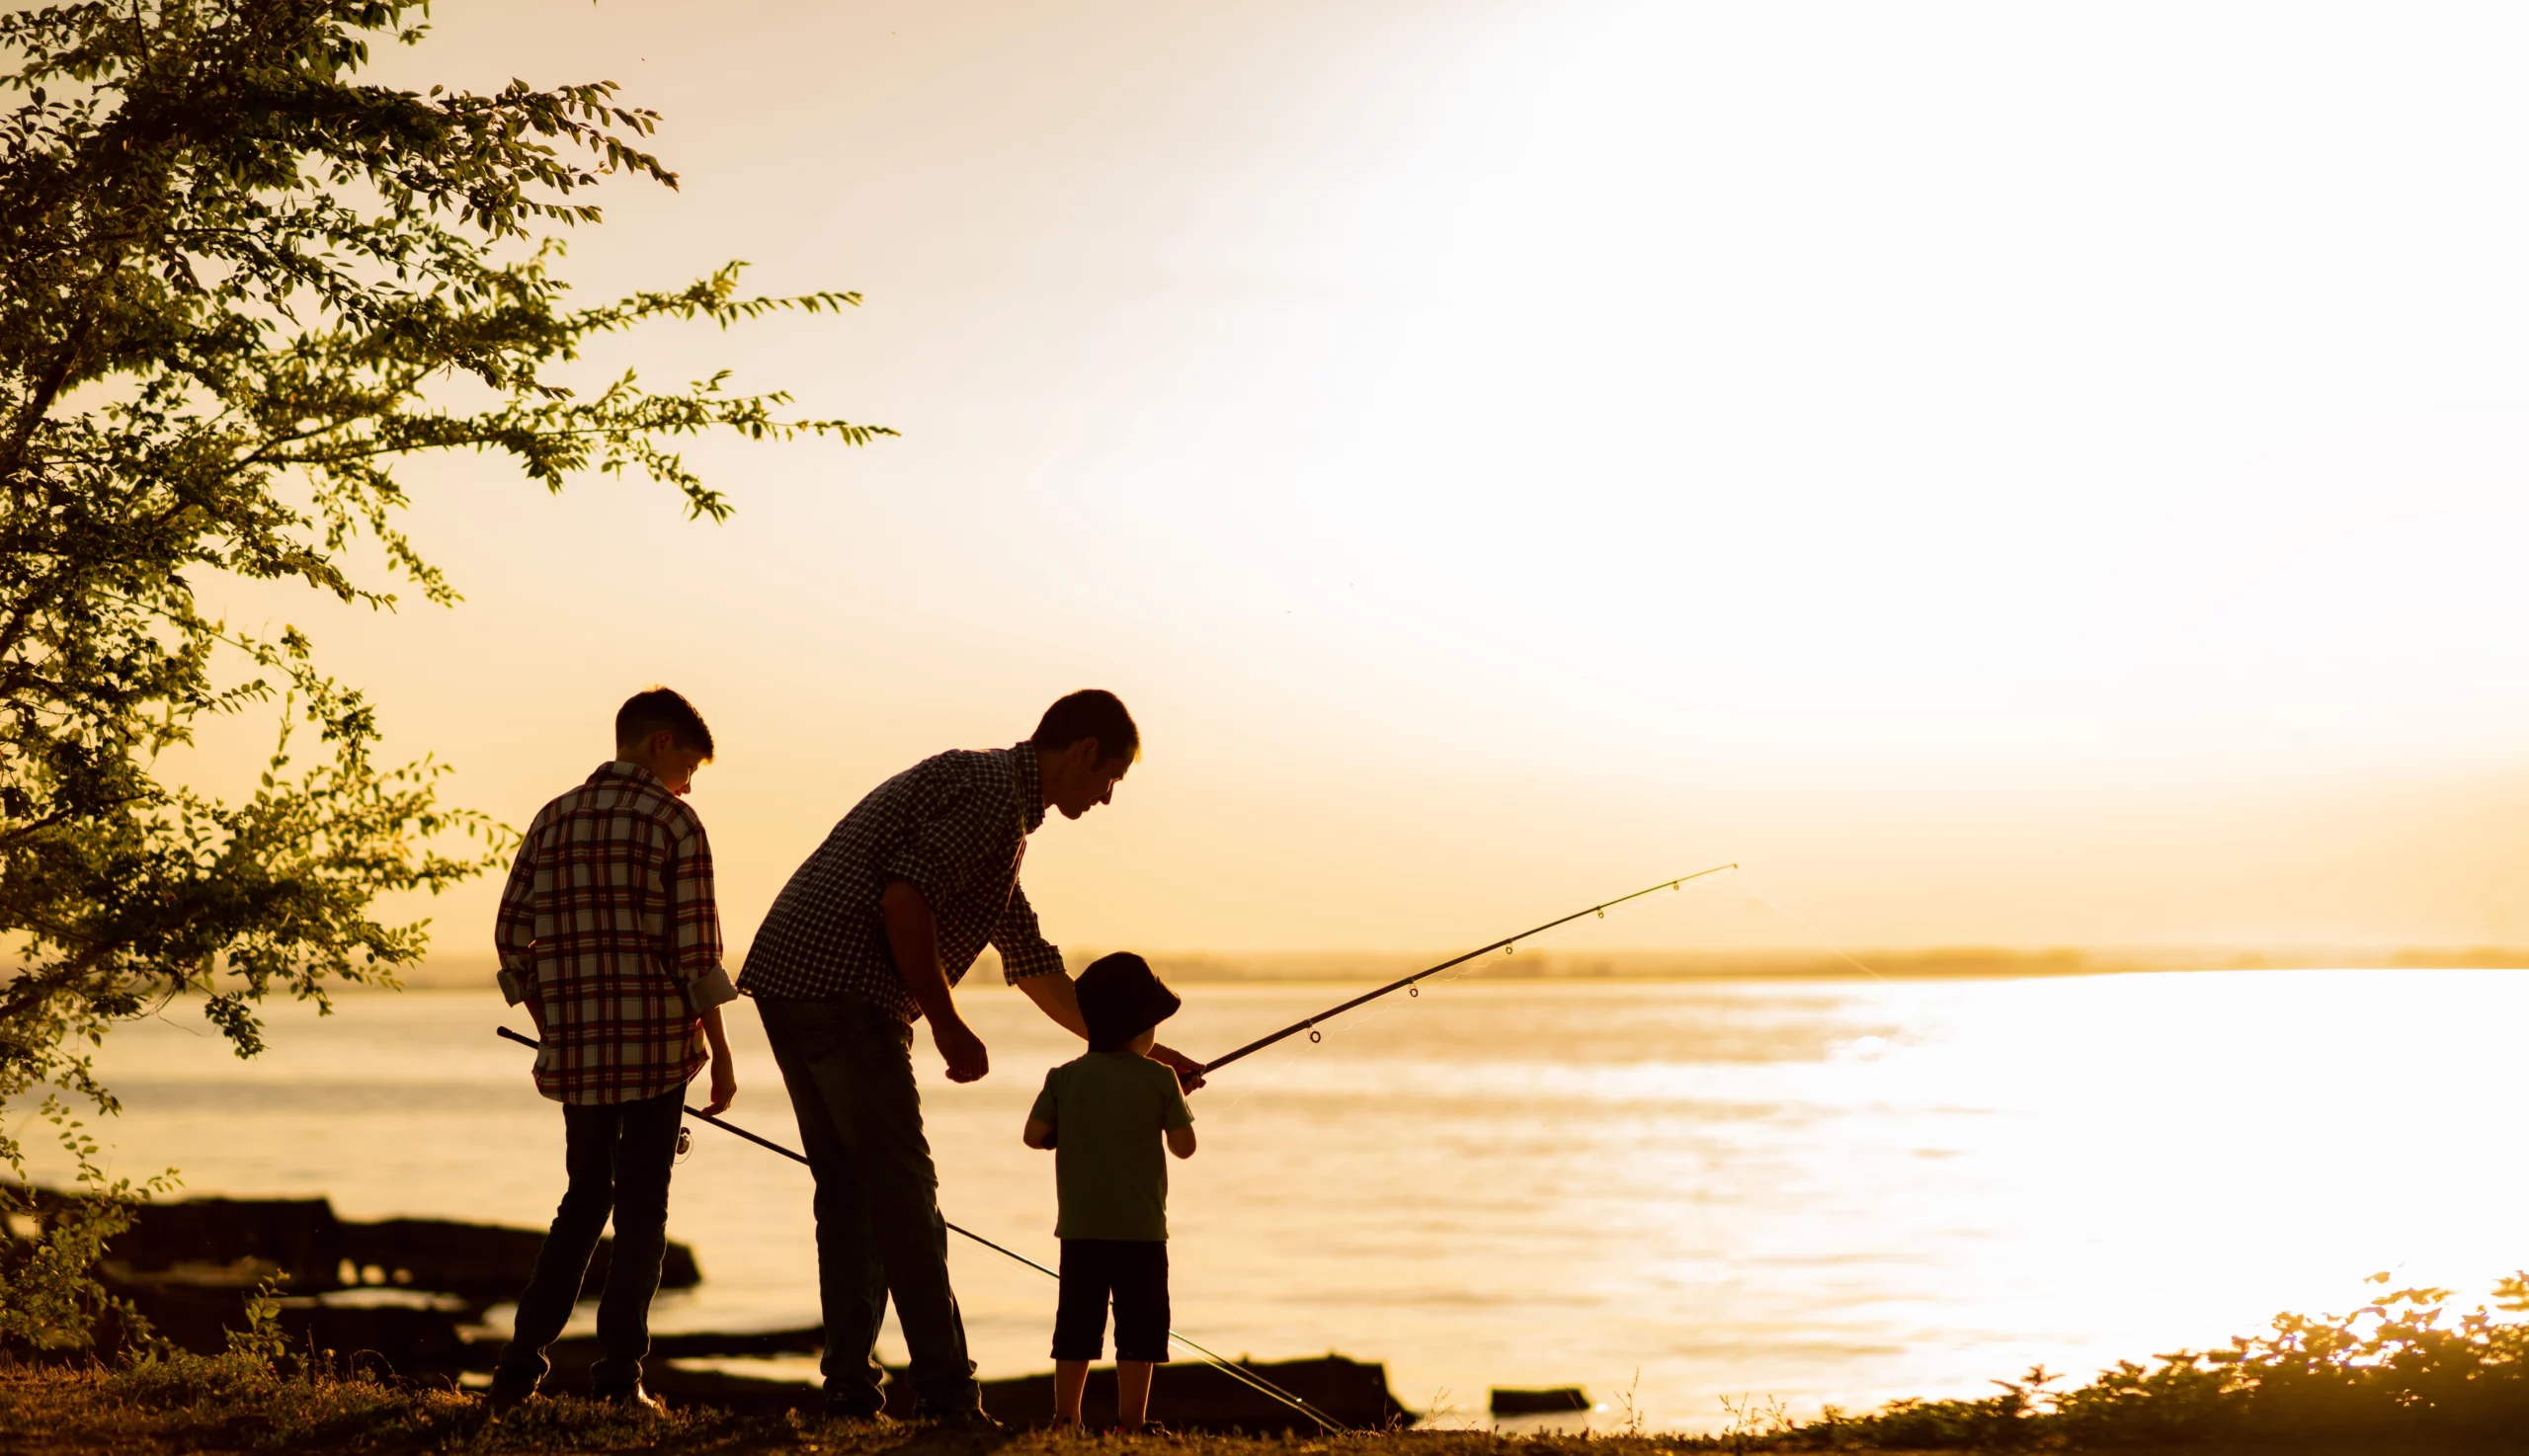 free activities for kids - go fishing | Swoosh Finance